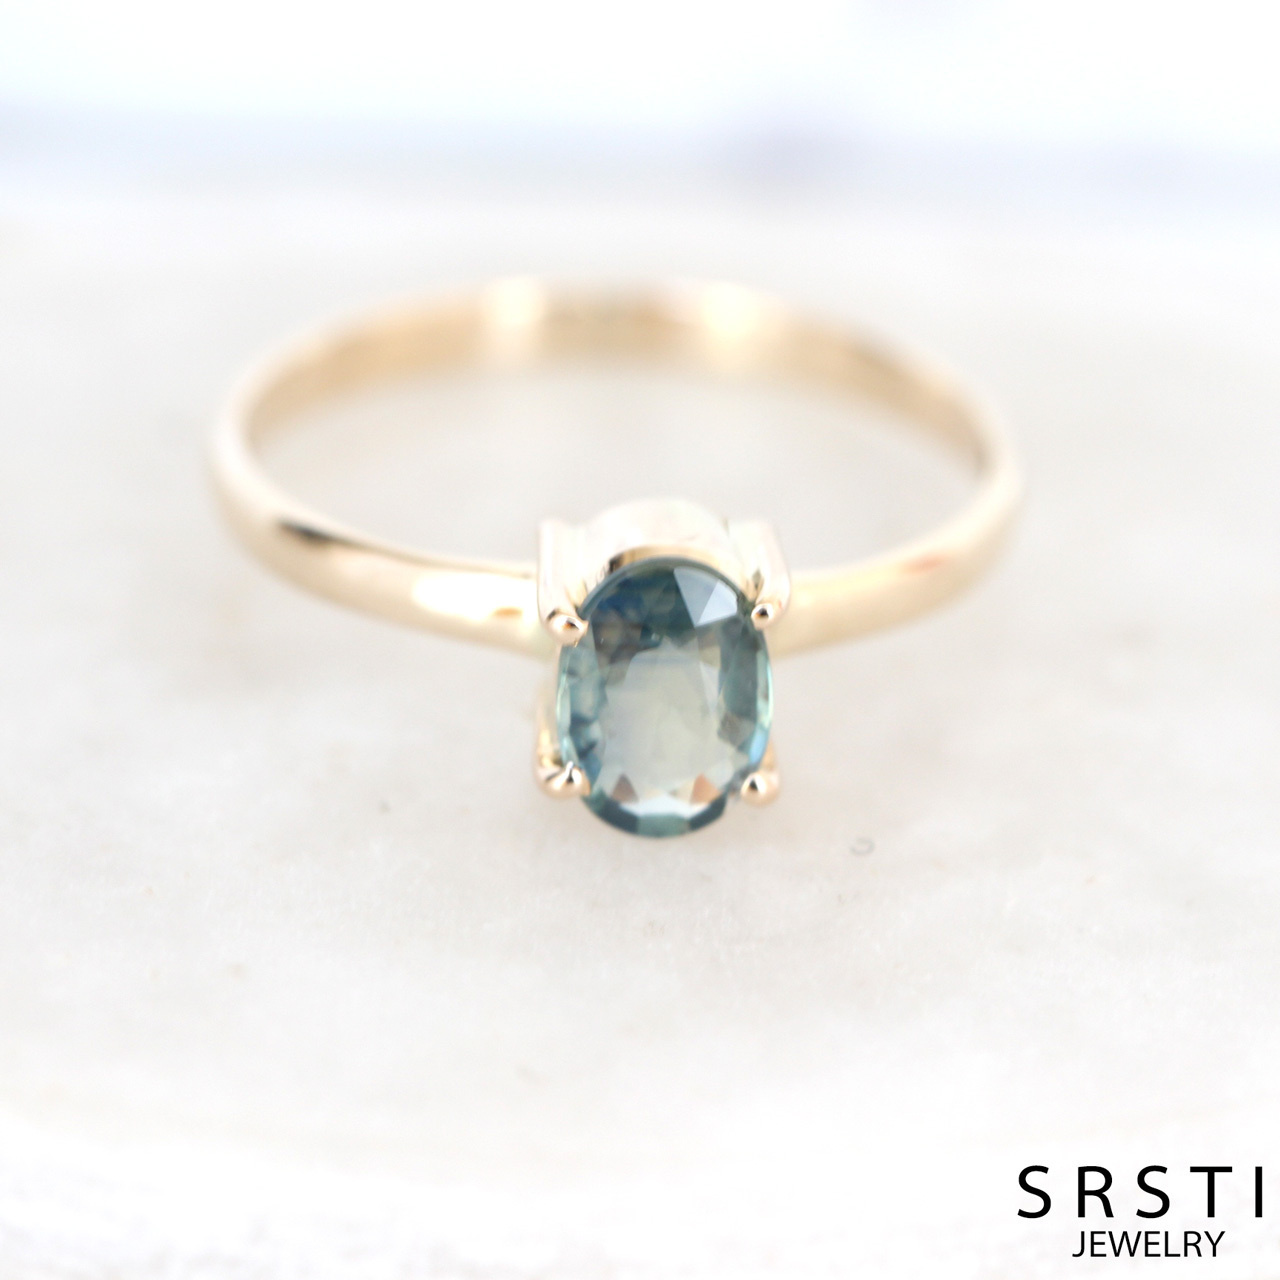 Blue star sapphire k10 gold ring